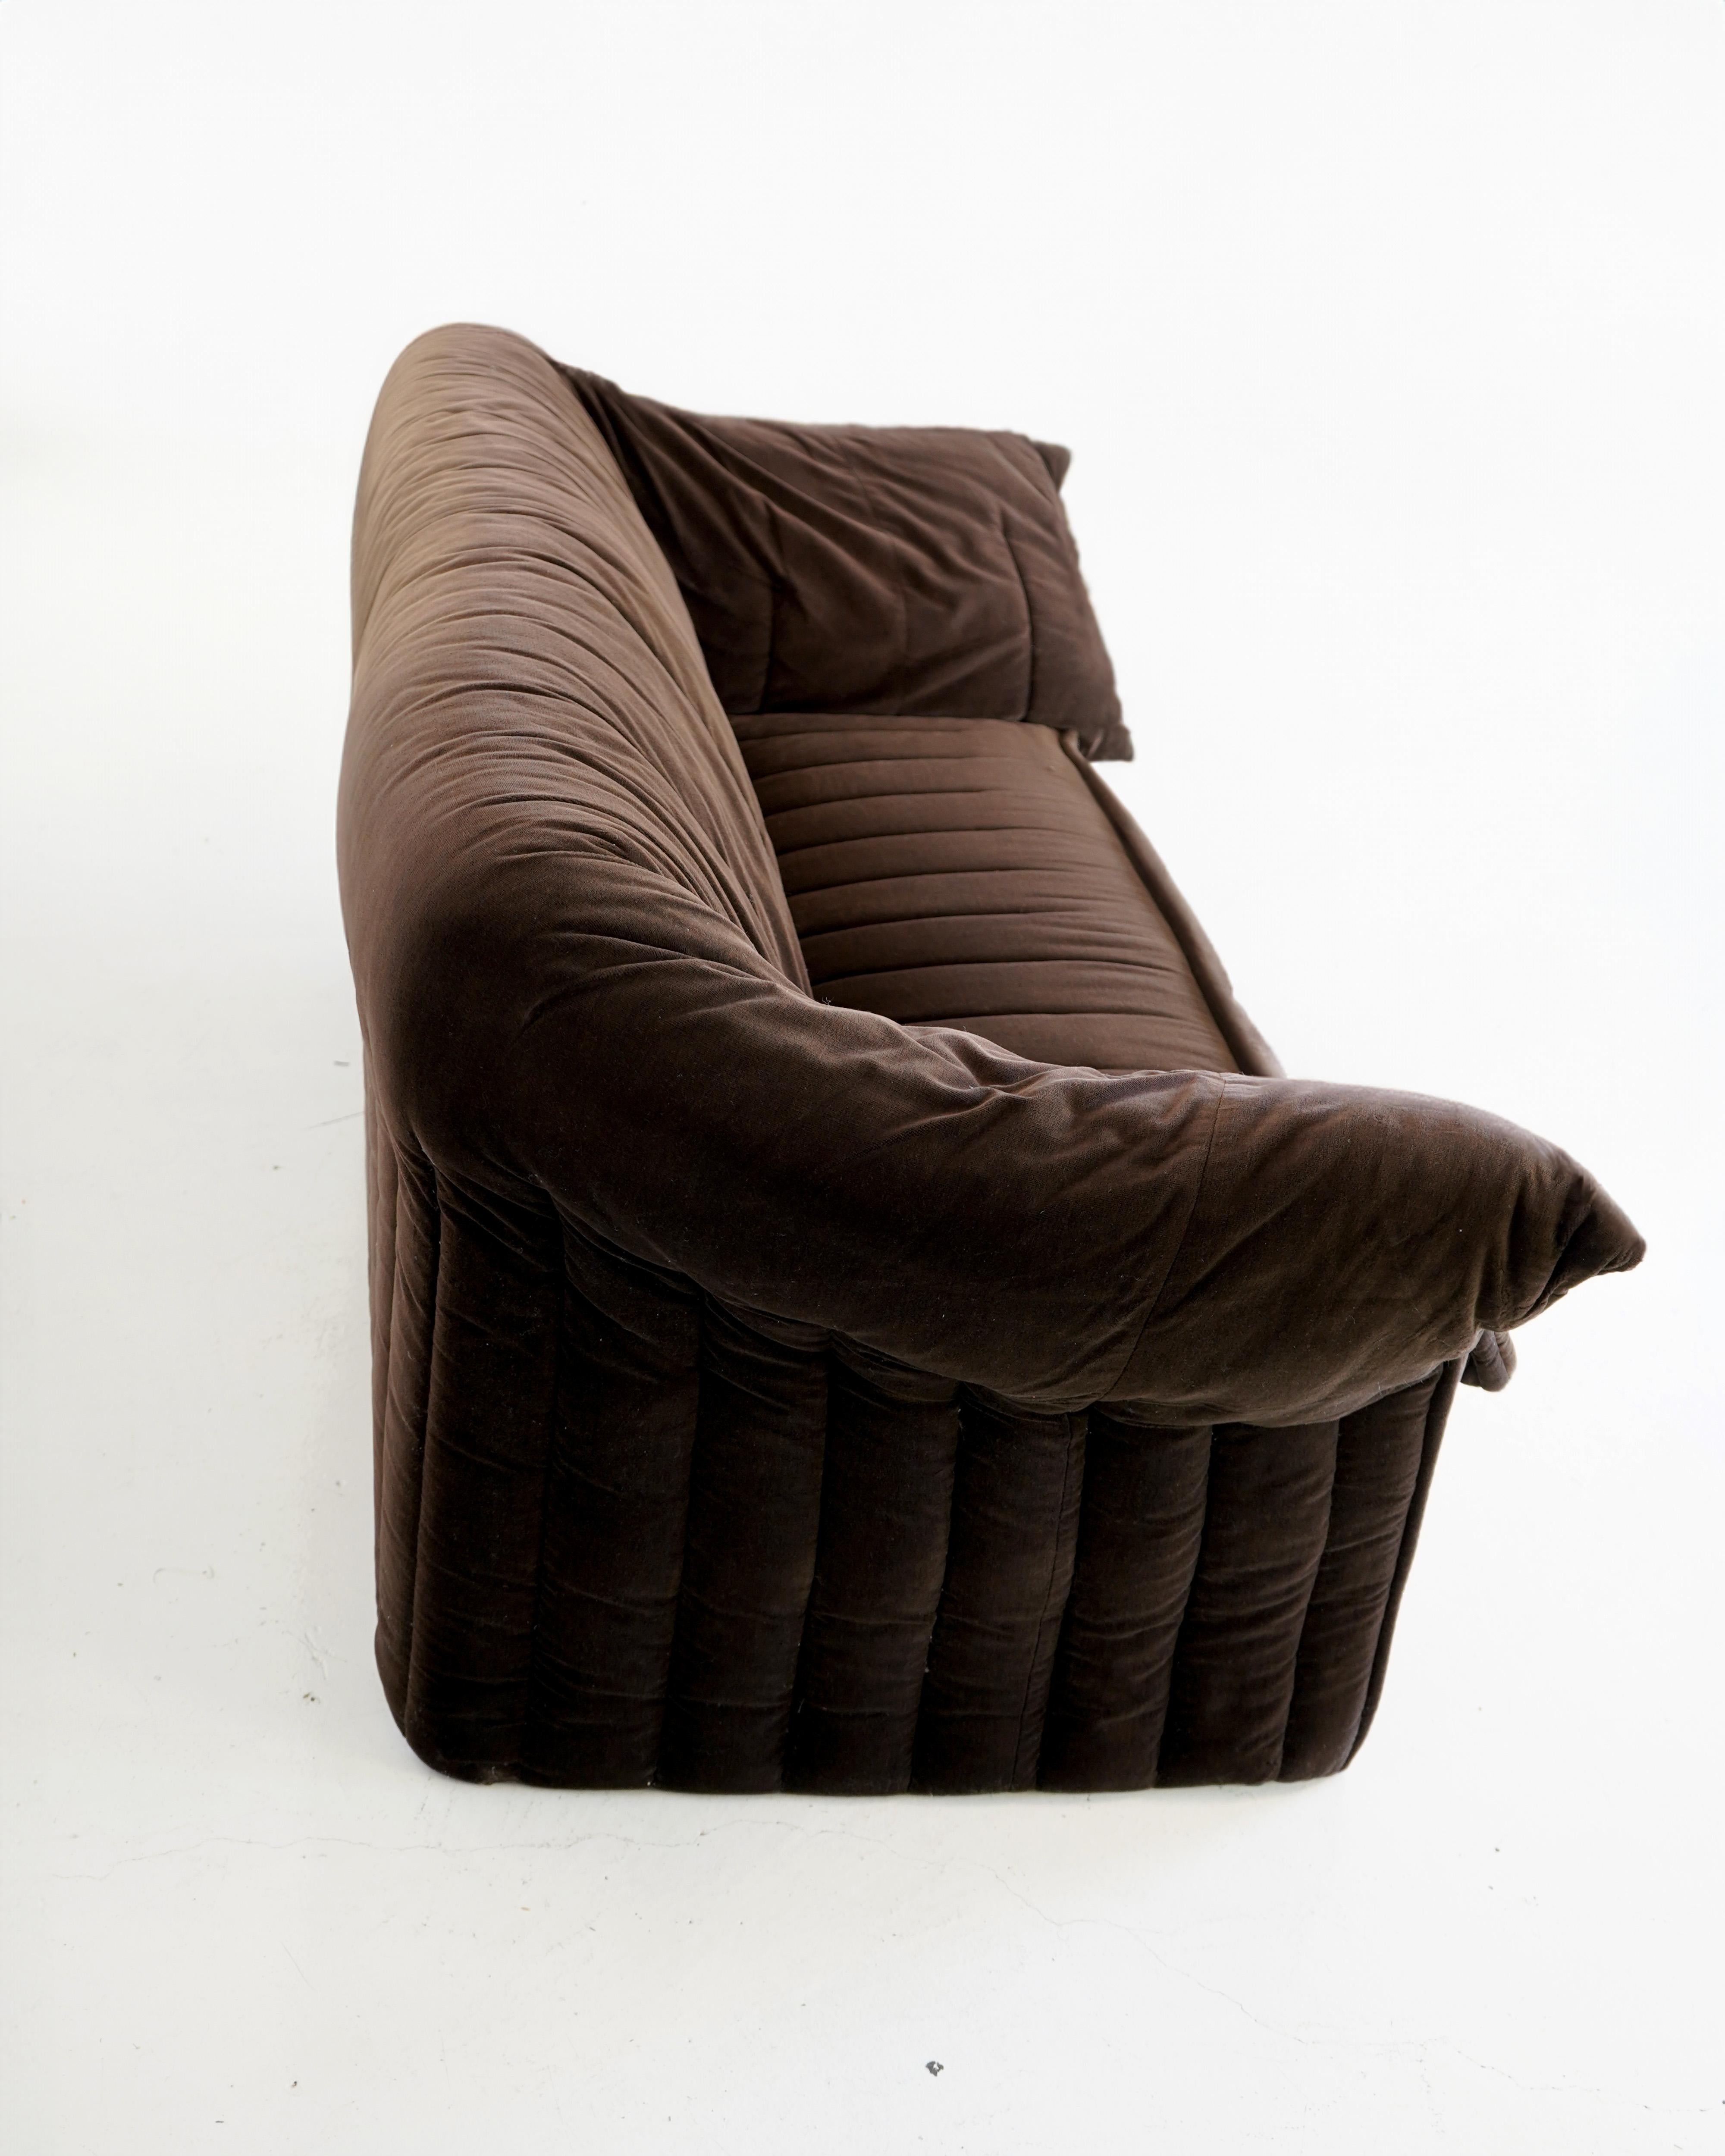 Post-Modern Stelle Sofa, Mario Bellini for B&B Italia, Pair available. For Sale